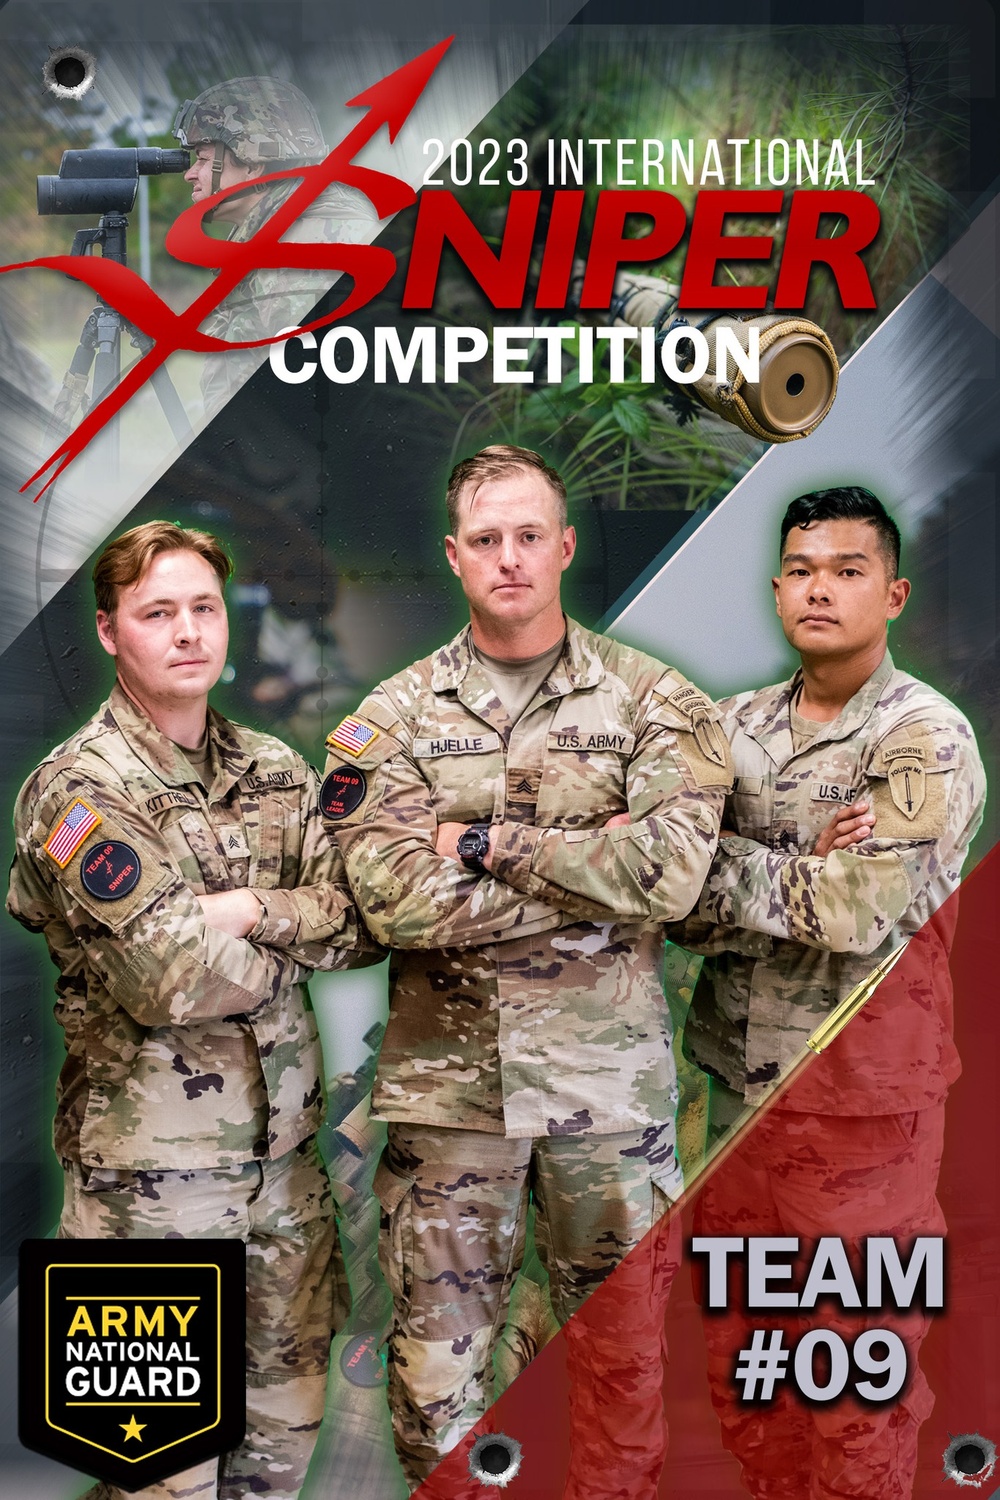 U.S. Army National Guard Sniper Team Won 2023 International Sniper Competition